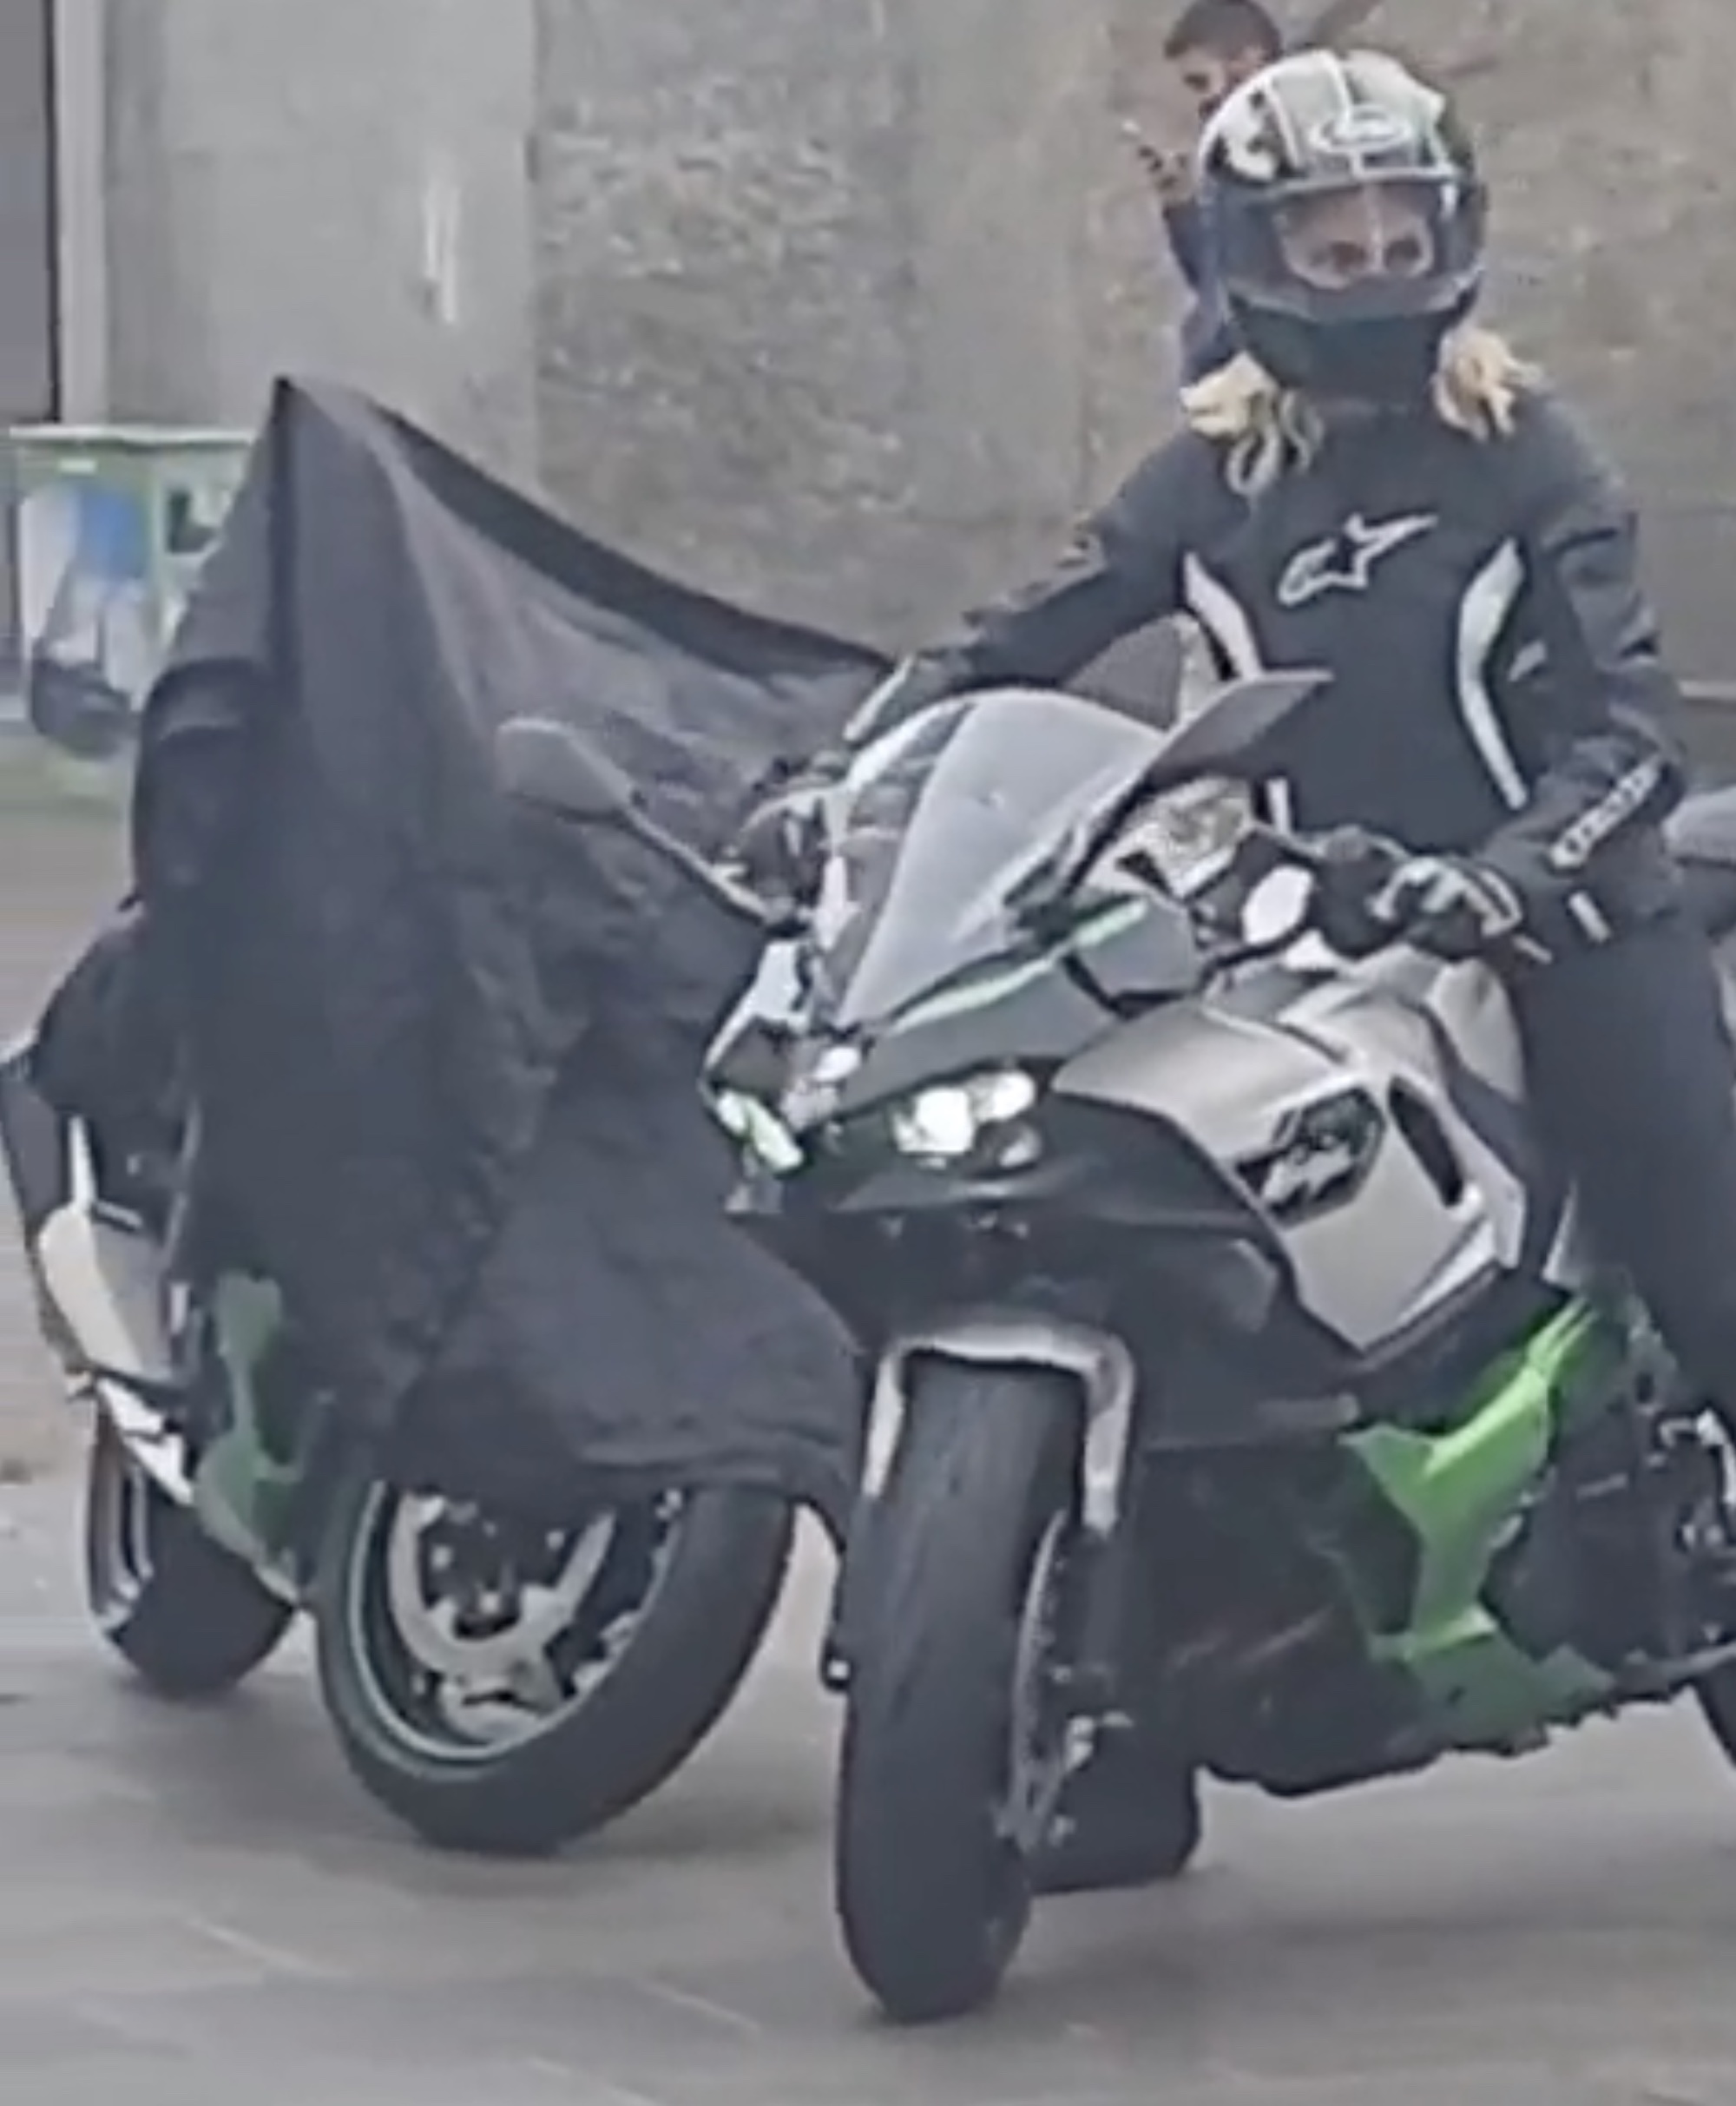 A view of Kawasaki's upcoming hybrid motorcycle. Media sourced from Turino Cronaca.